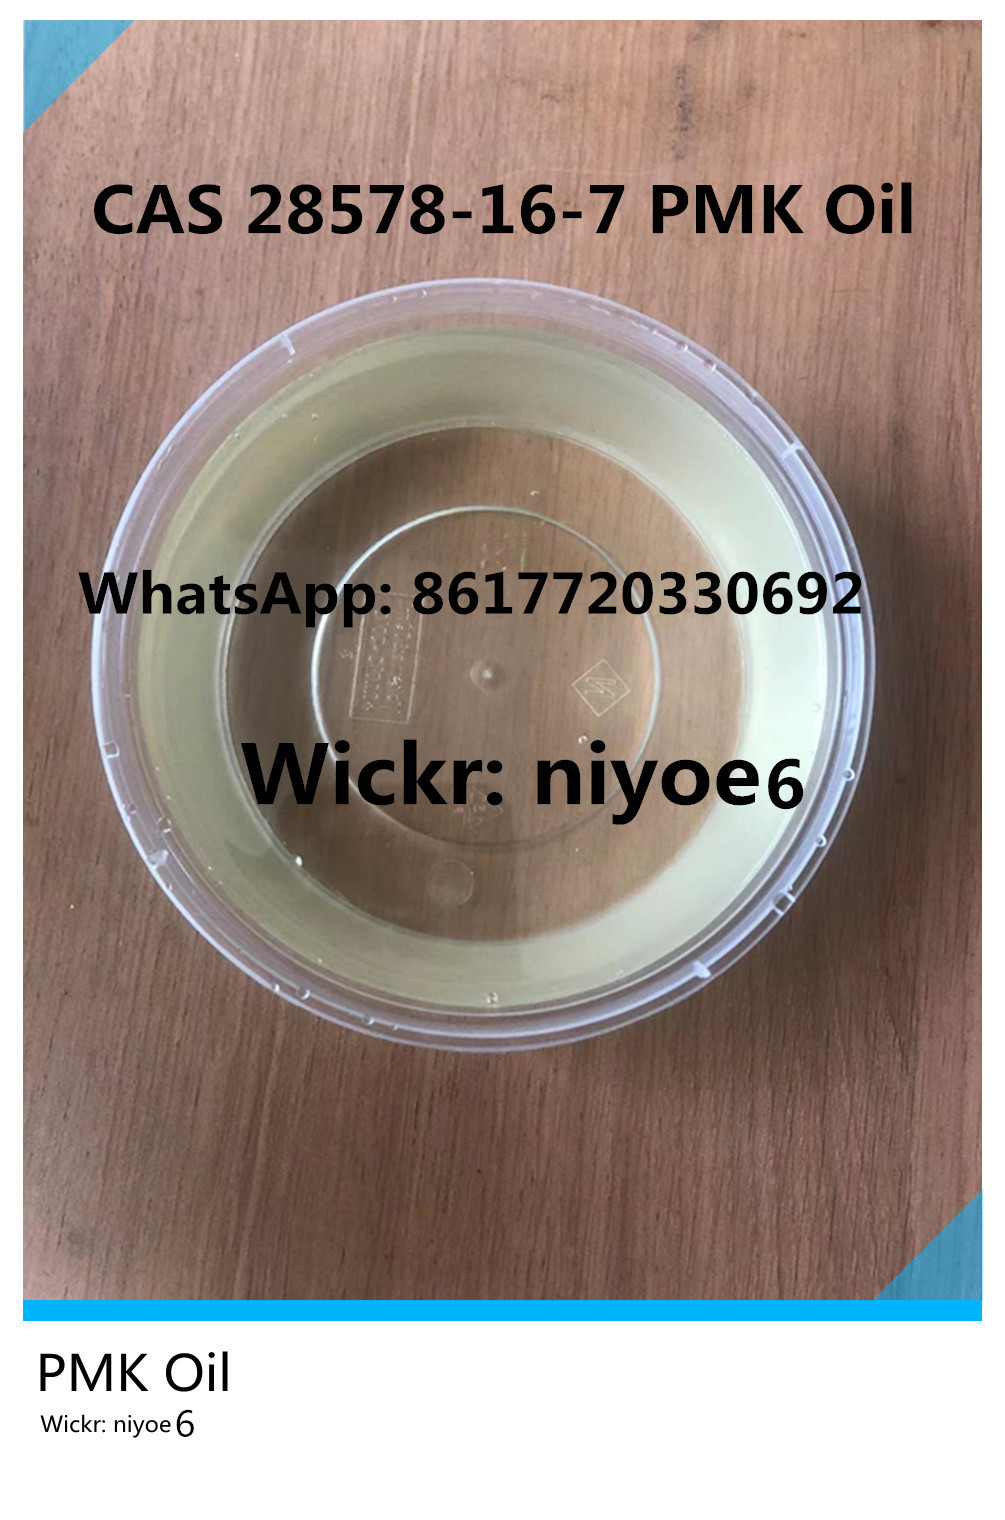 Research Chemicals New Pmk Oil Pmk Powder 28578-16-7 in Stock Wickr: niyoe6